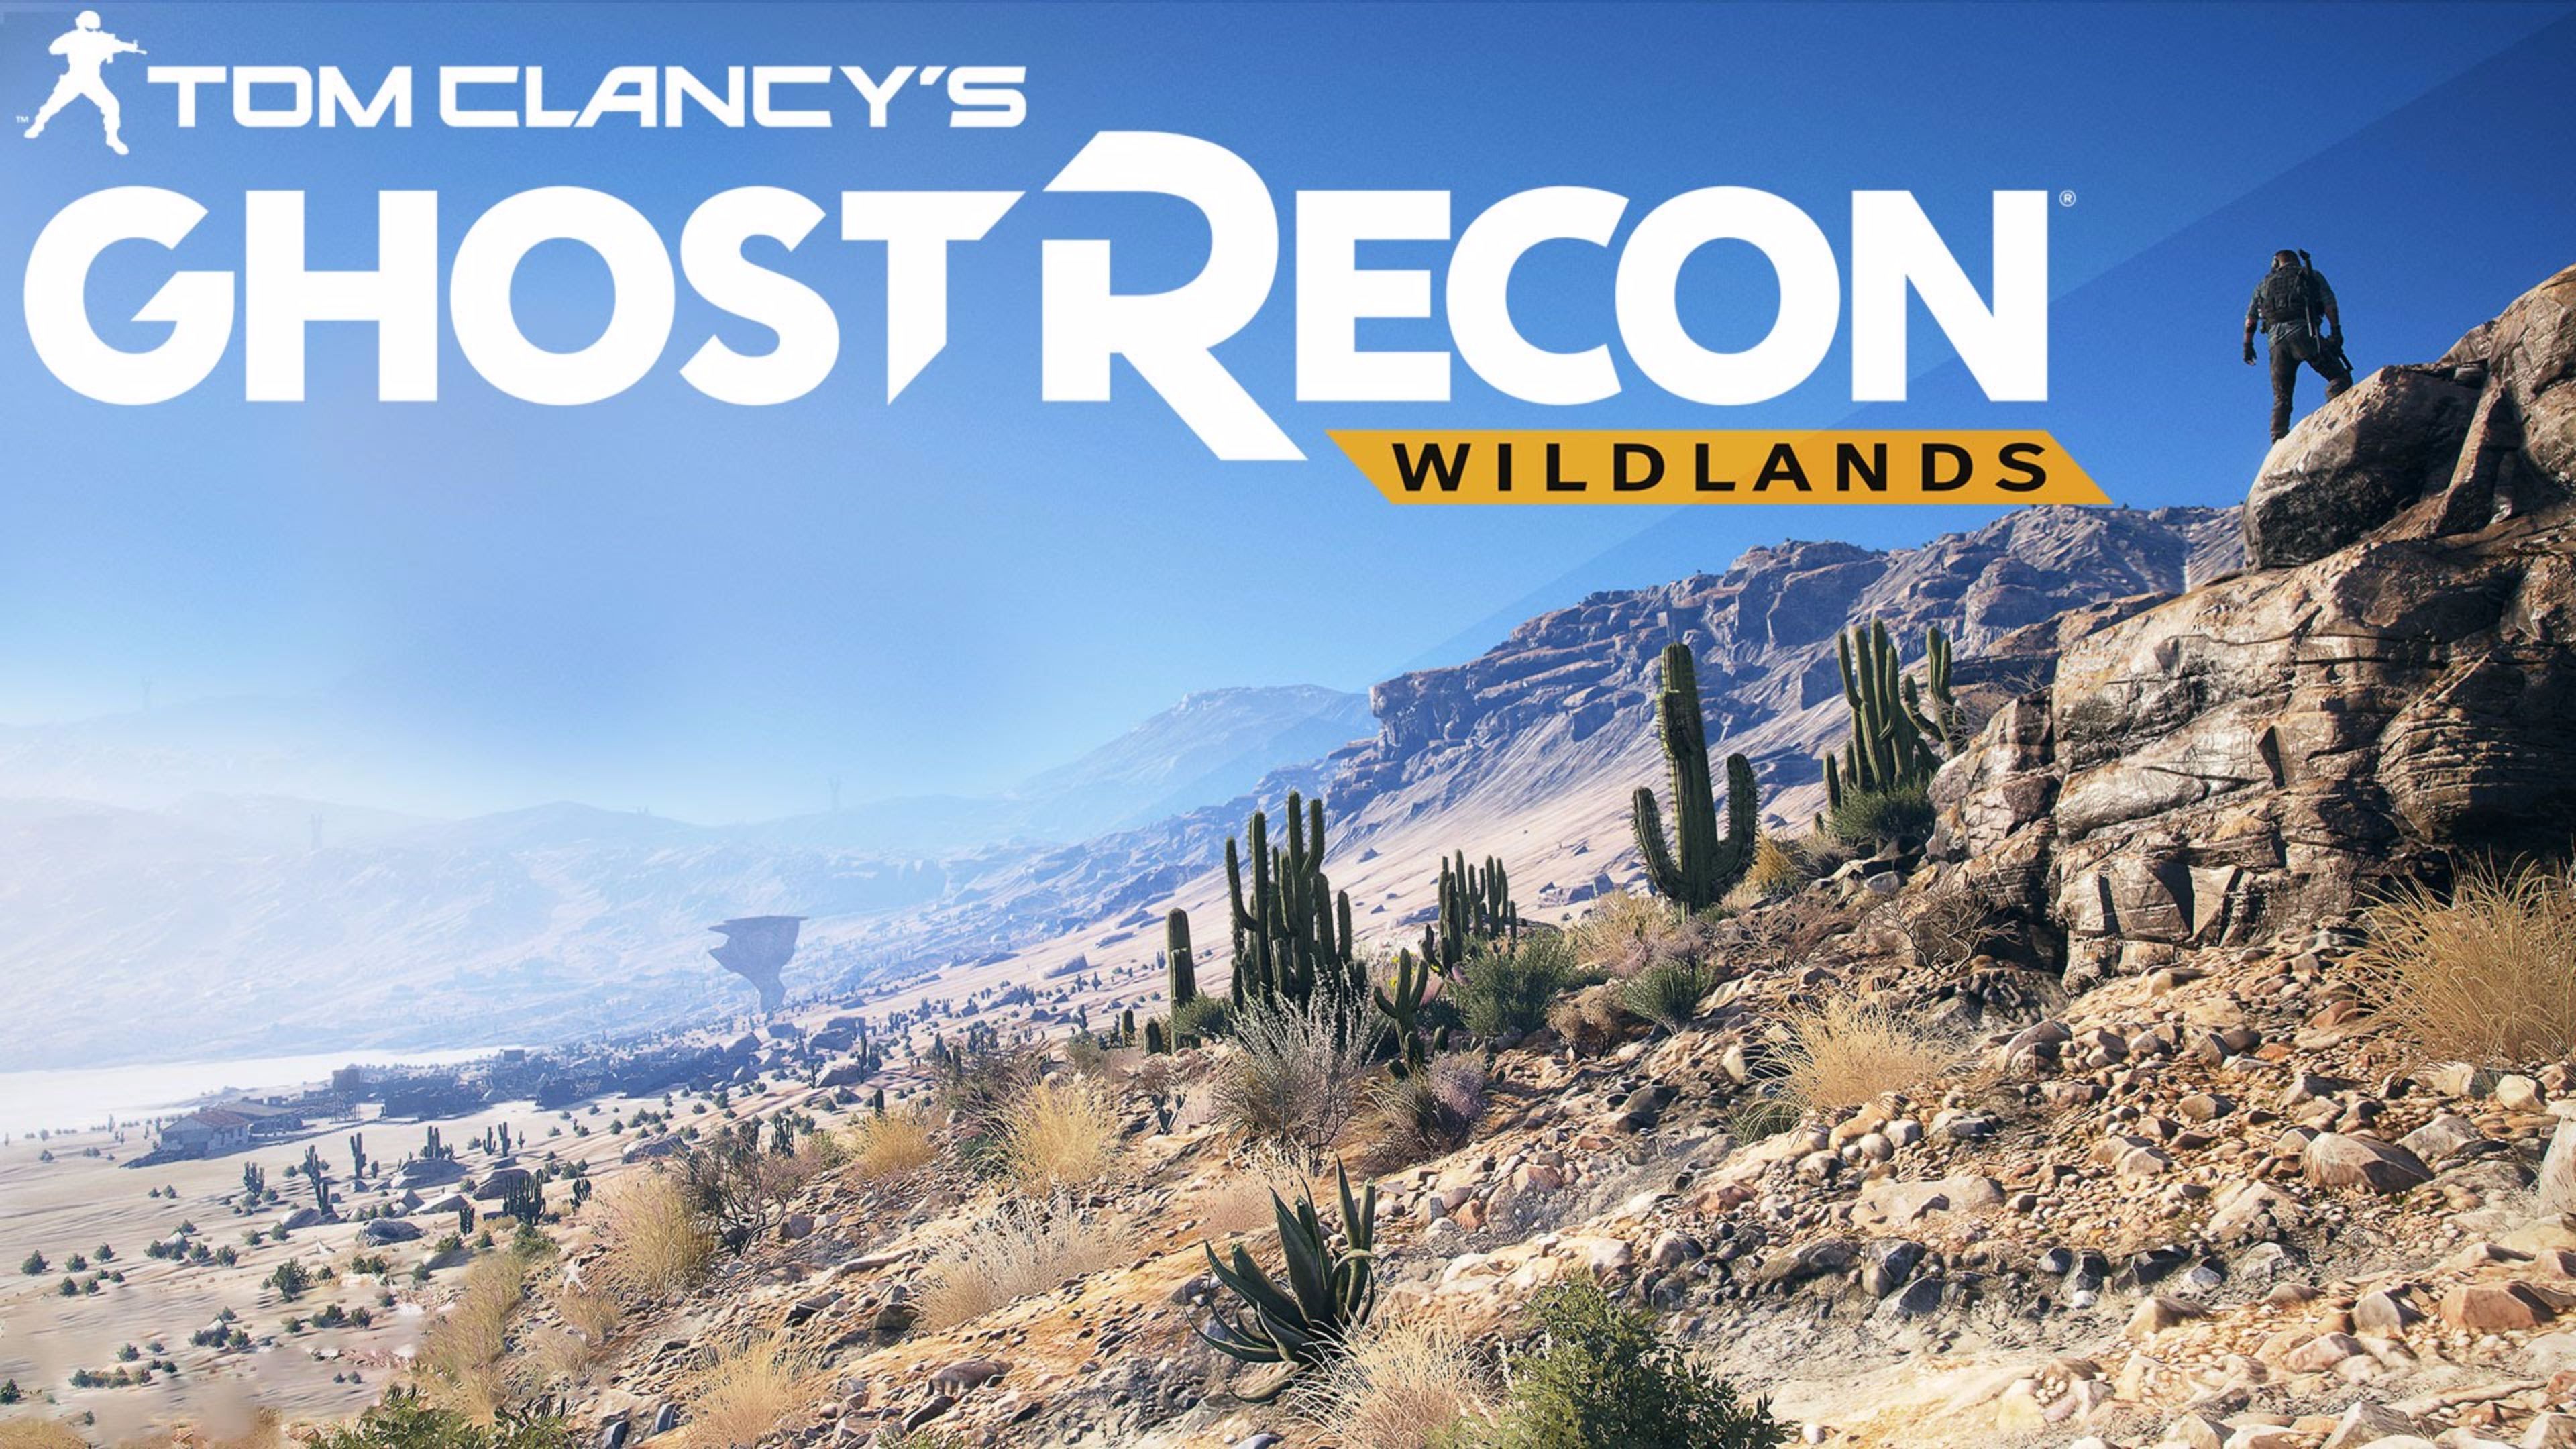 Tom Clancy's Ghost Recon Wildlands 4k Ultra HD Wallpaper